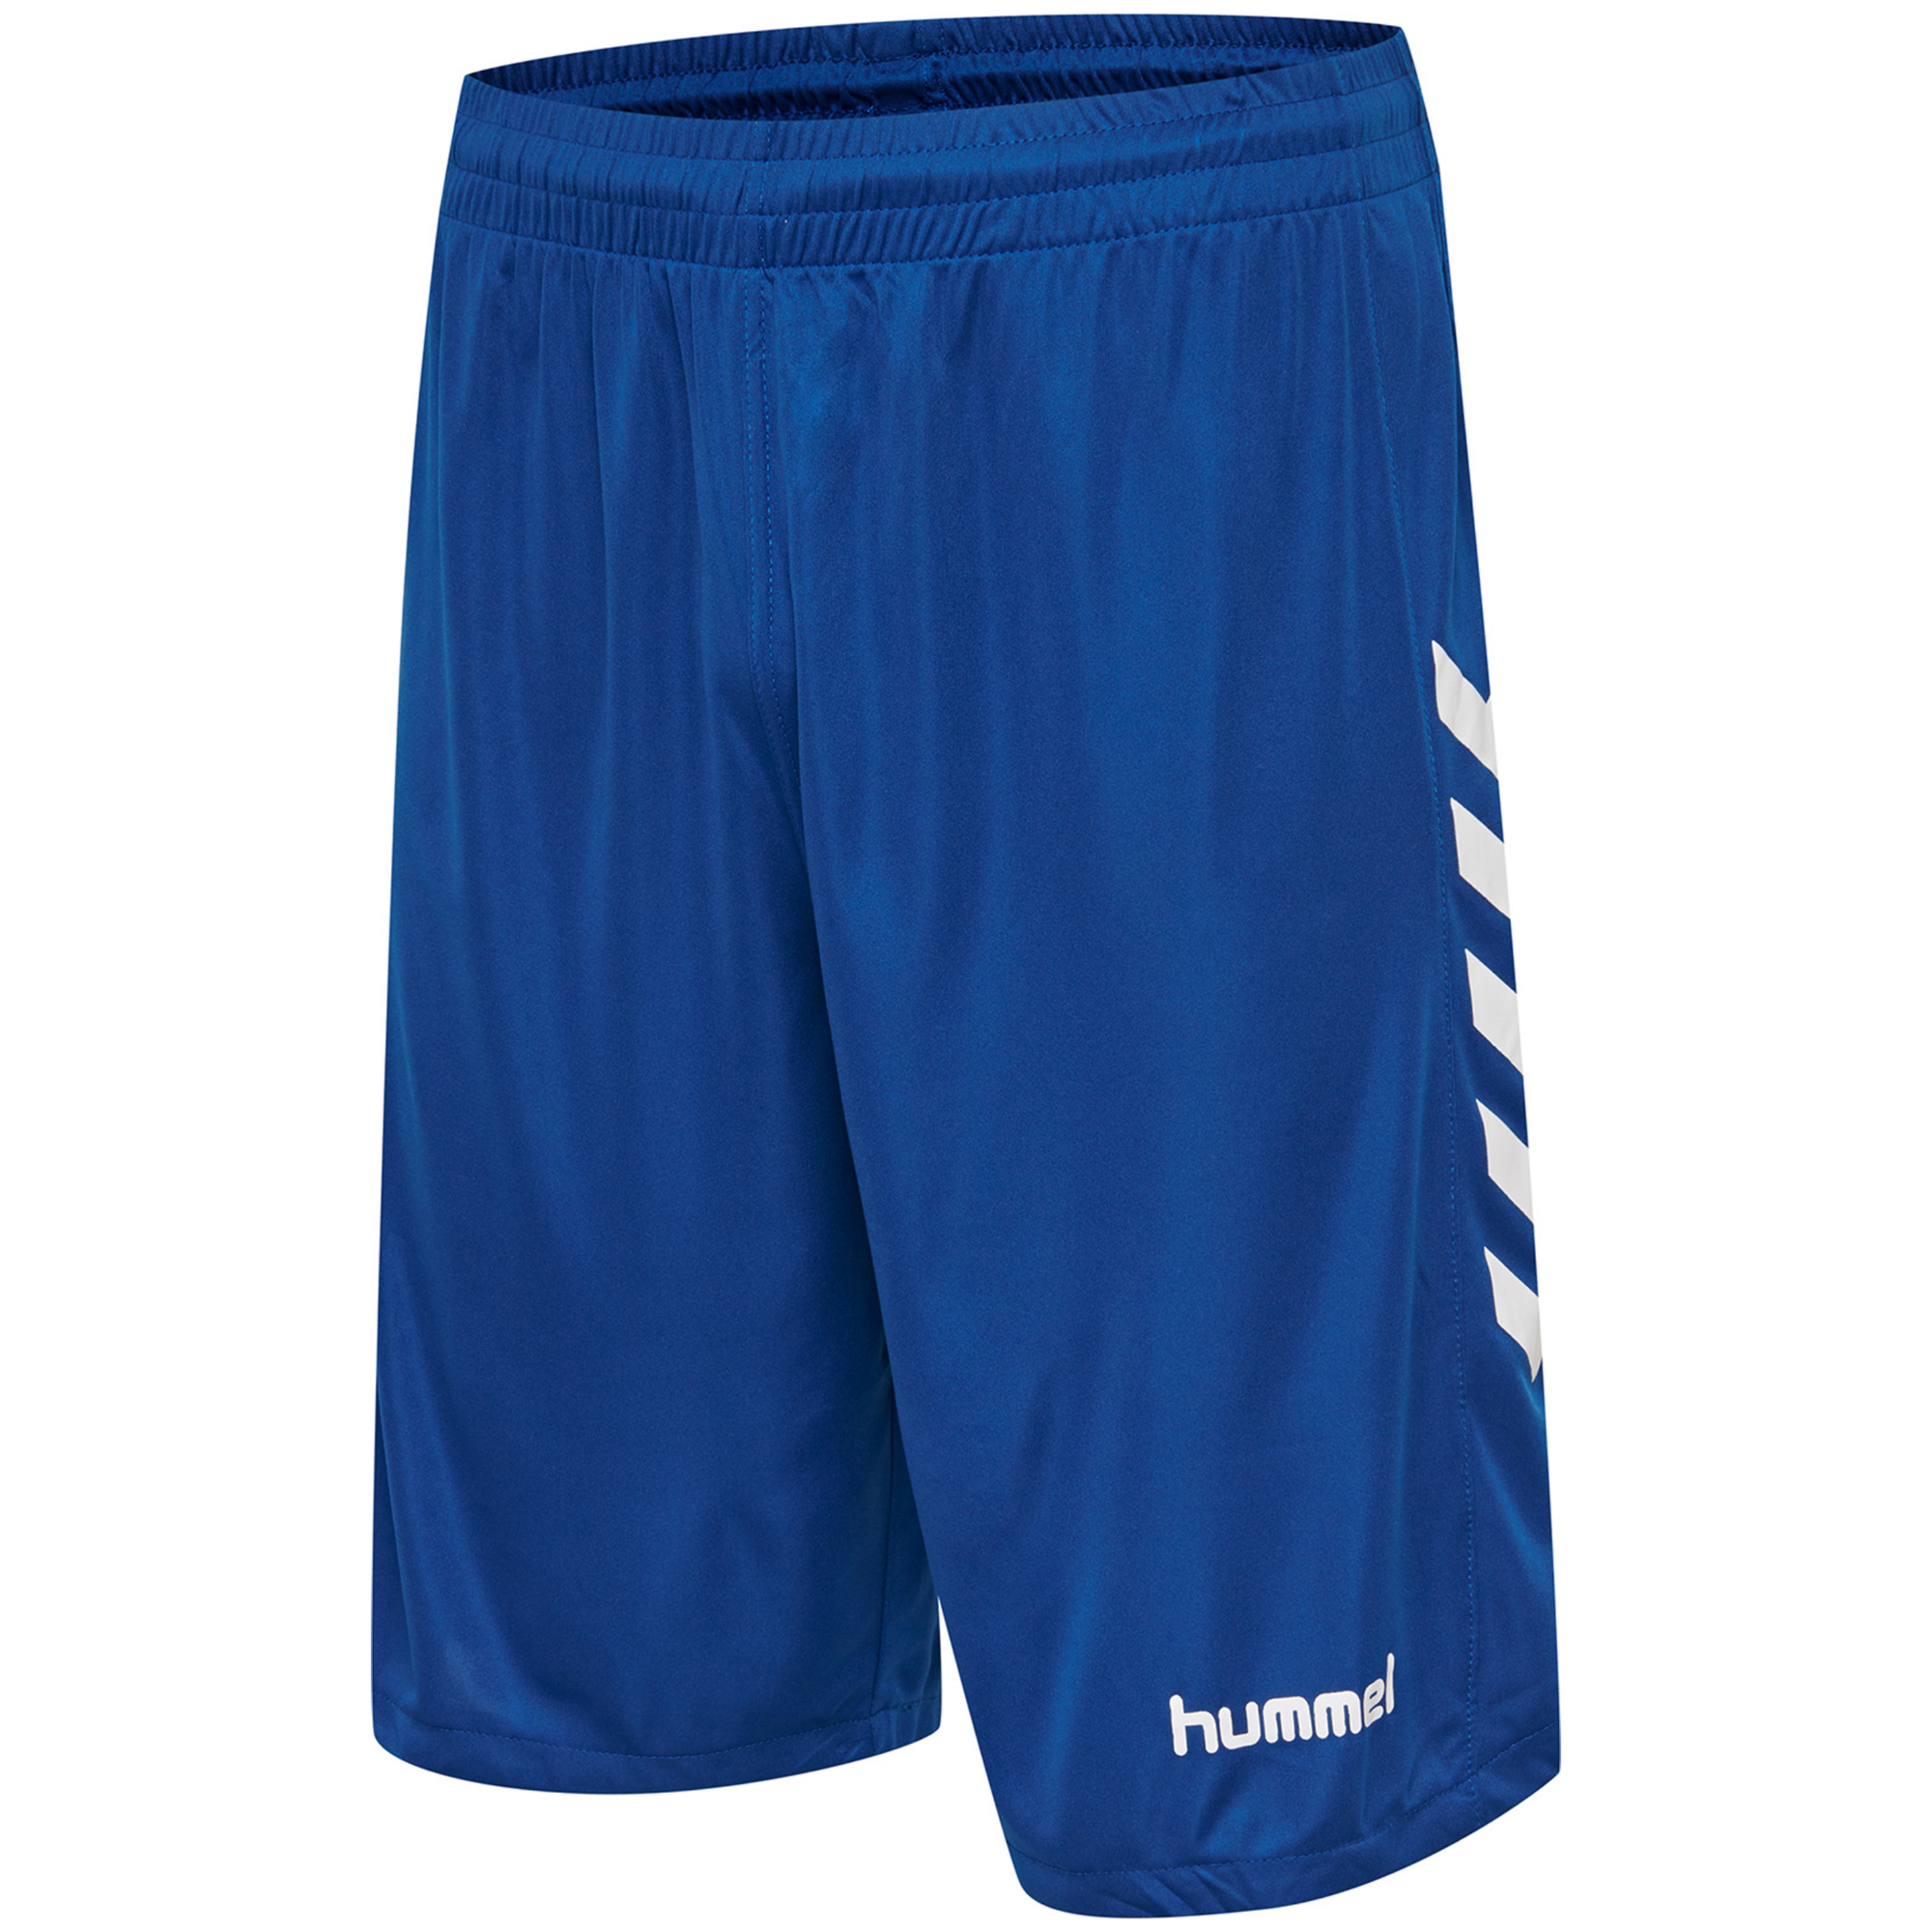 Pantalón Basket Hummel - Azul  MKP